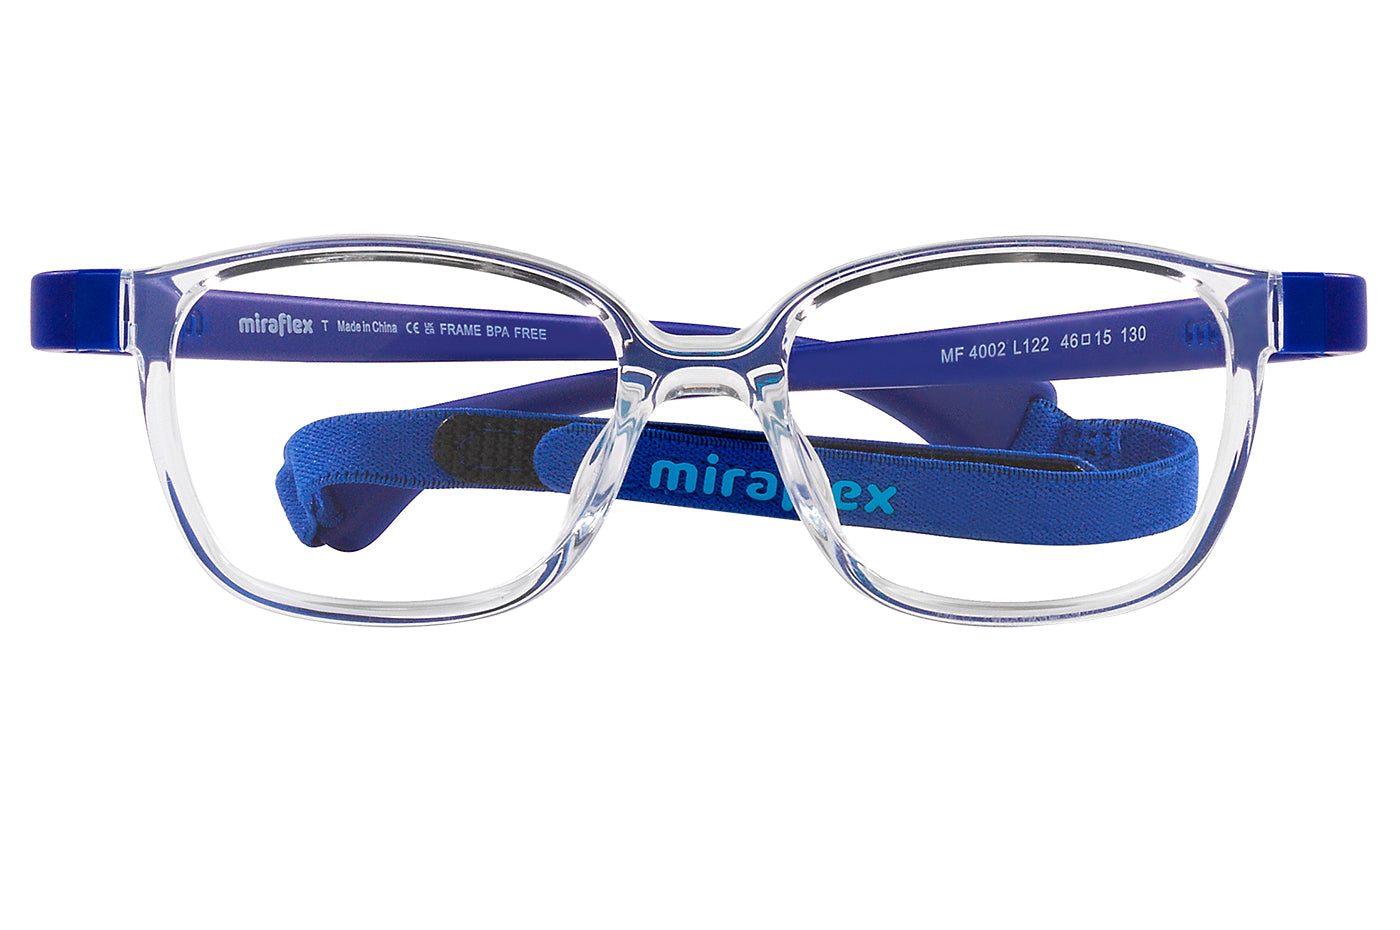 Vista-1 - Gafas oftálmicas Miraflex 0MF4002 Niños Color Transparente